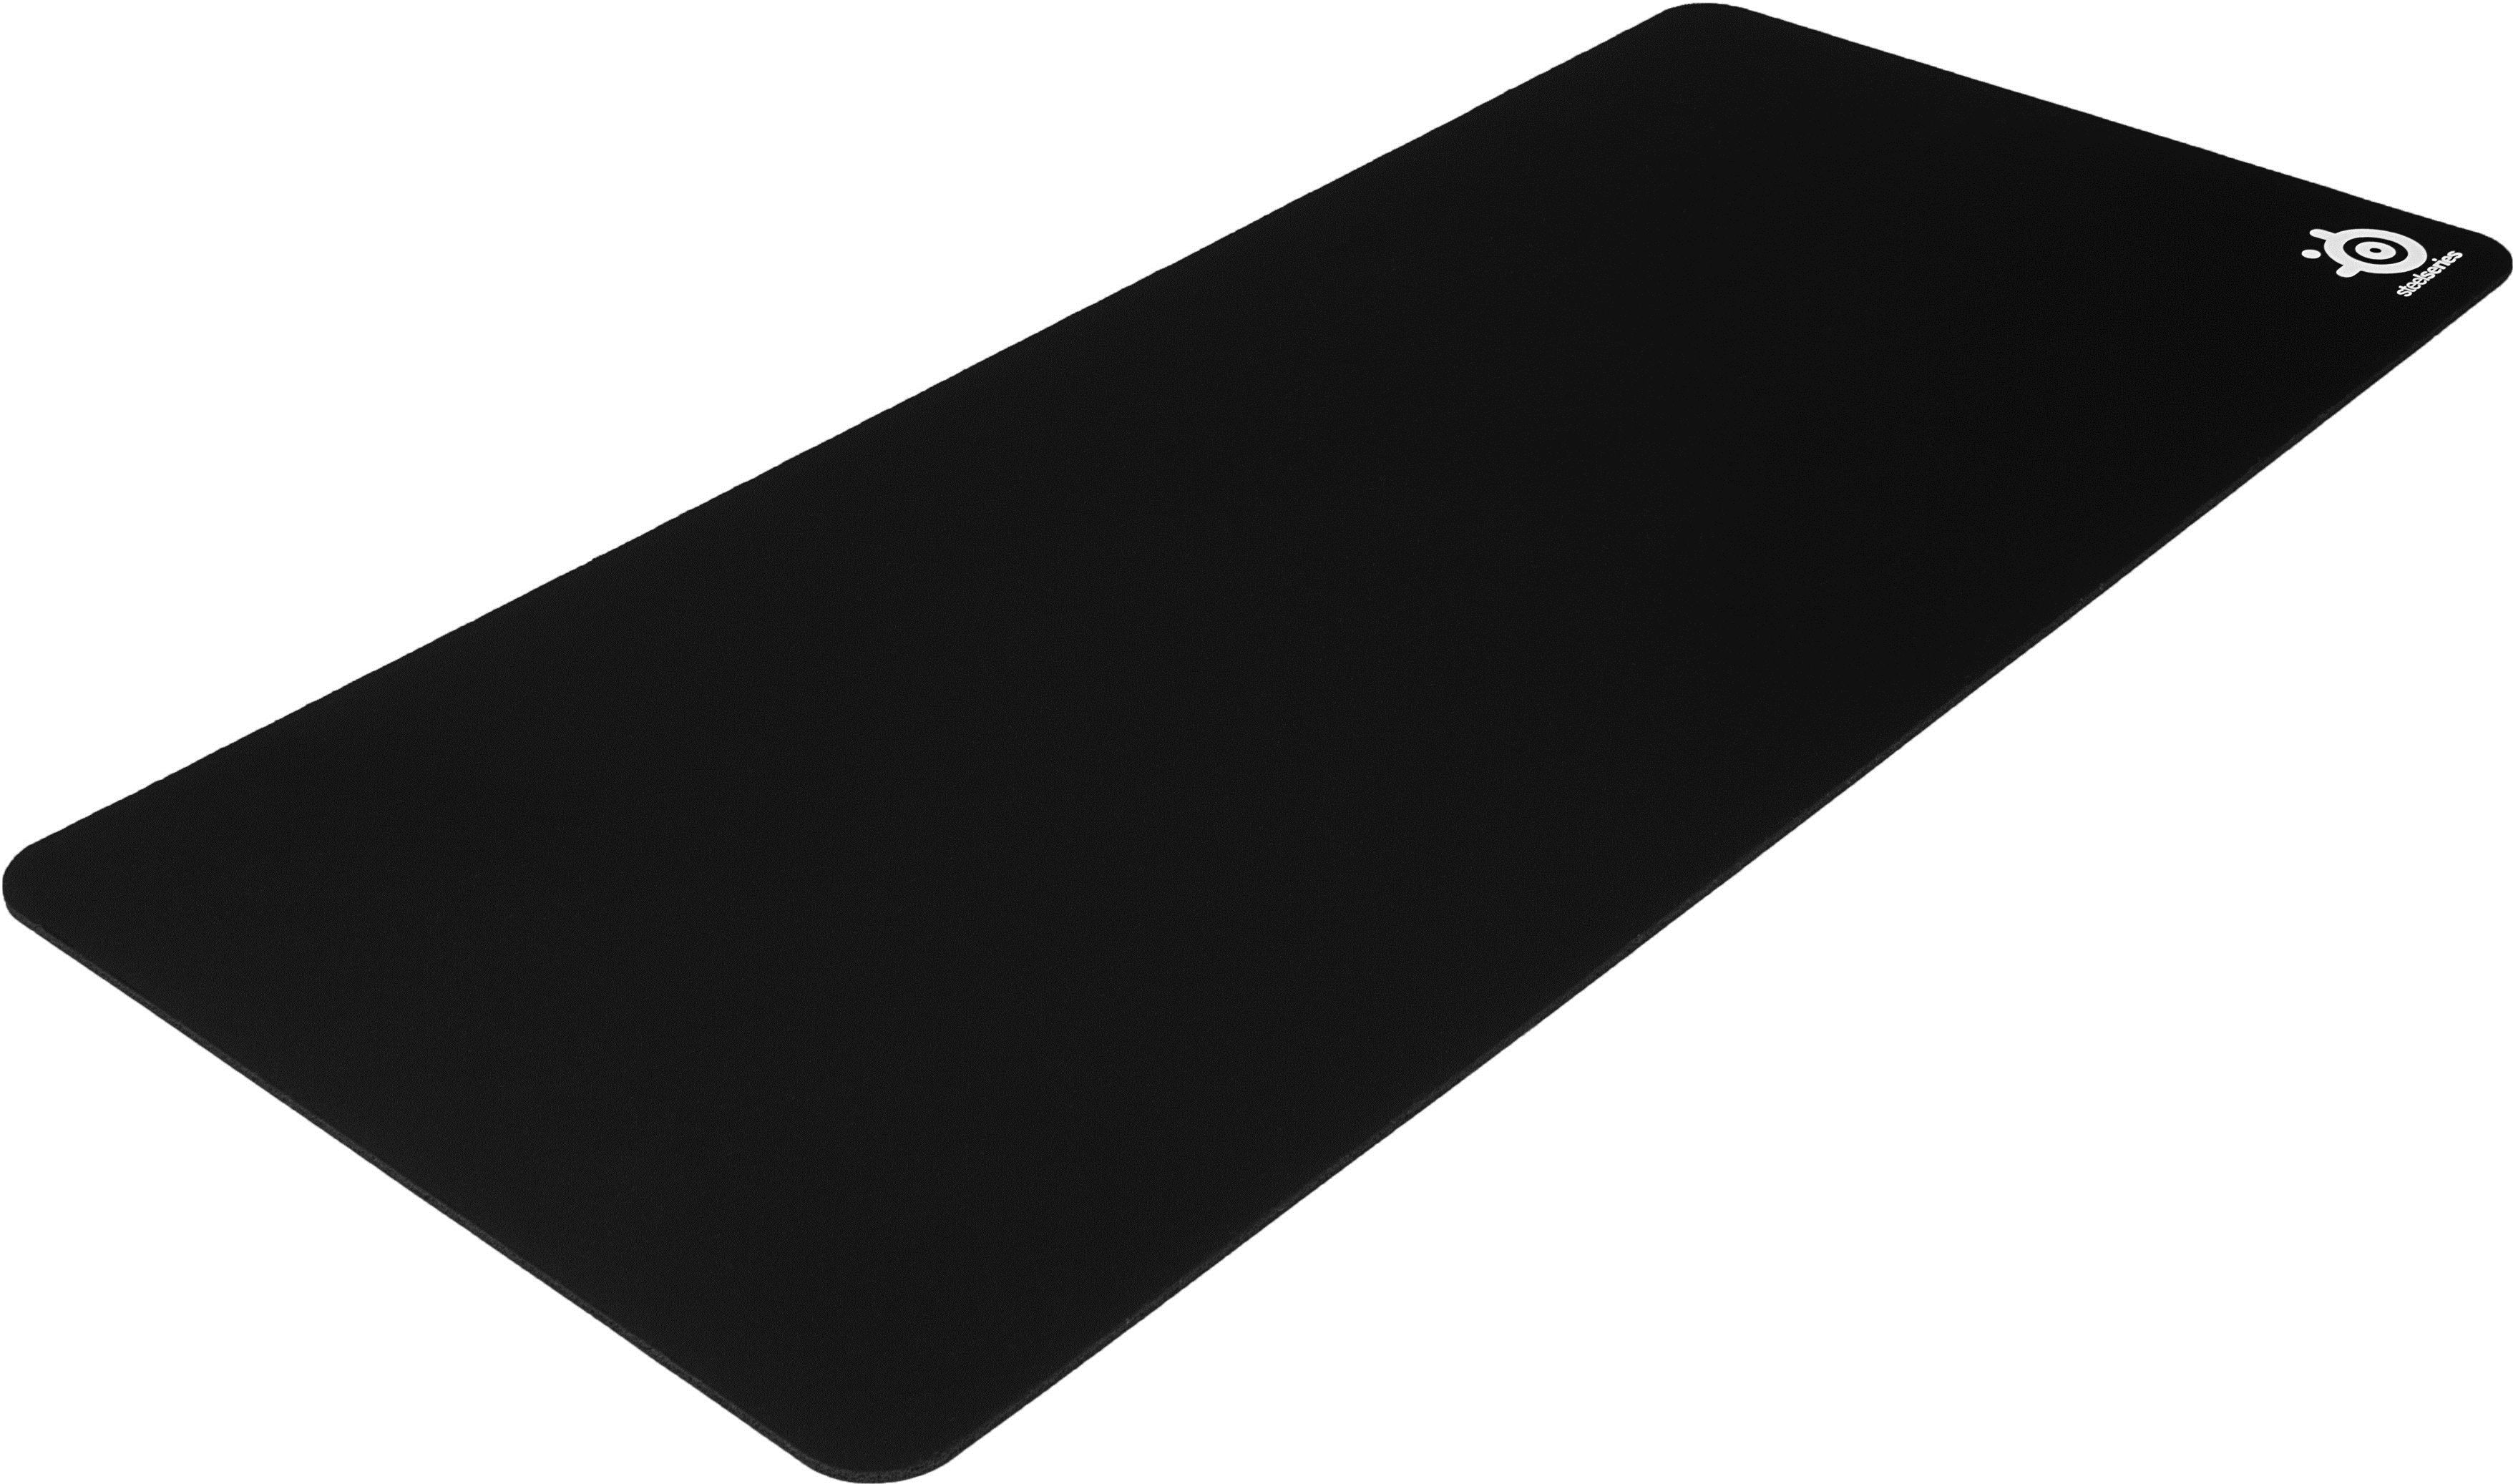 Generic Tapis pour PC - Jeu - Surface Lisse Antidérapant - 900 x 400 mm -  PSG - Prix pas cher